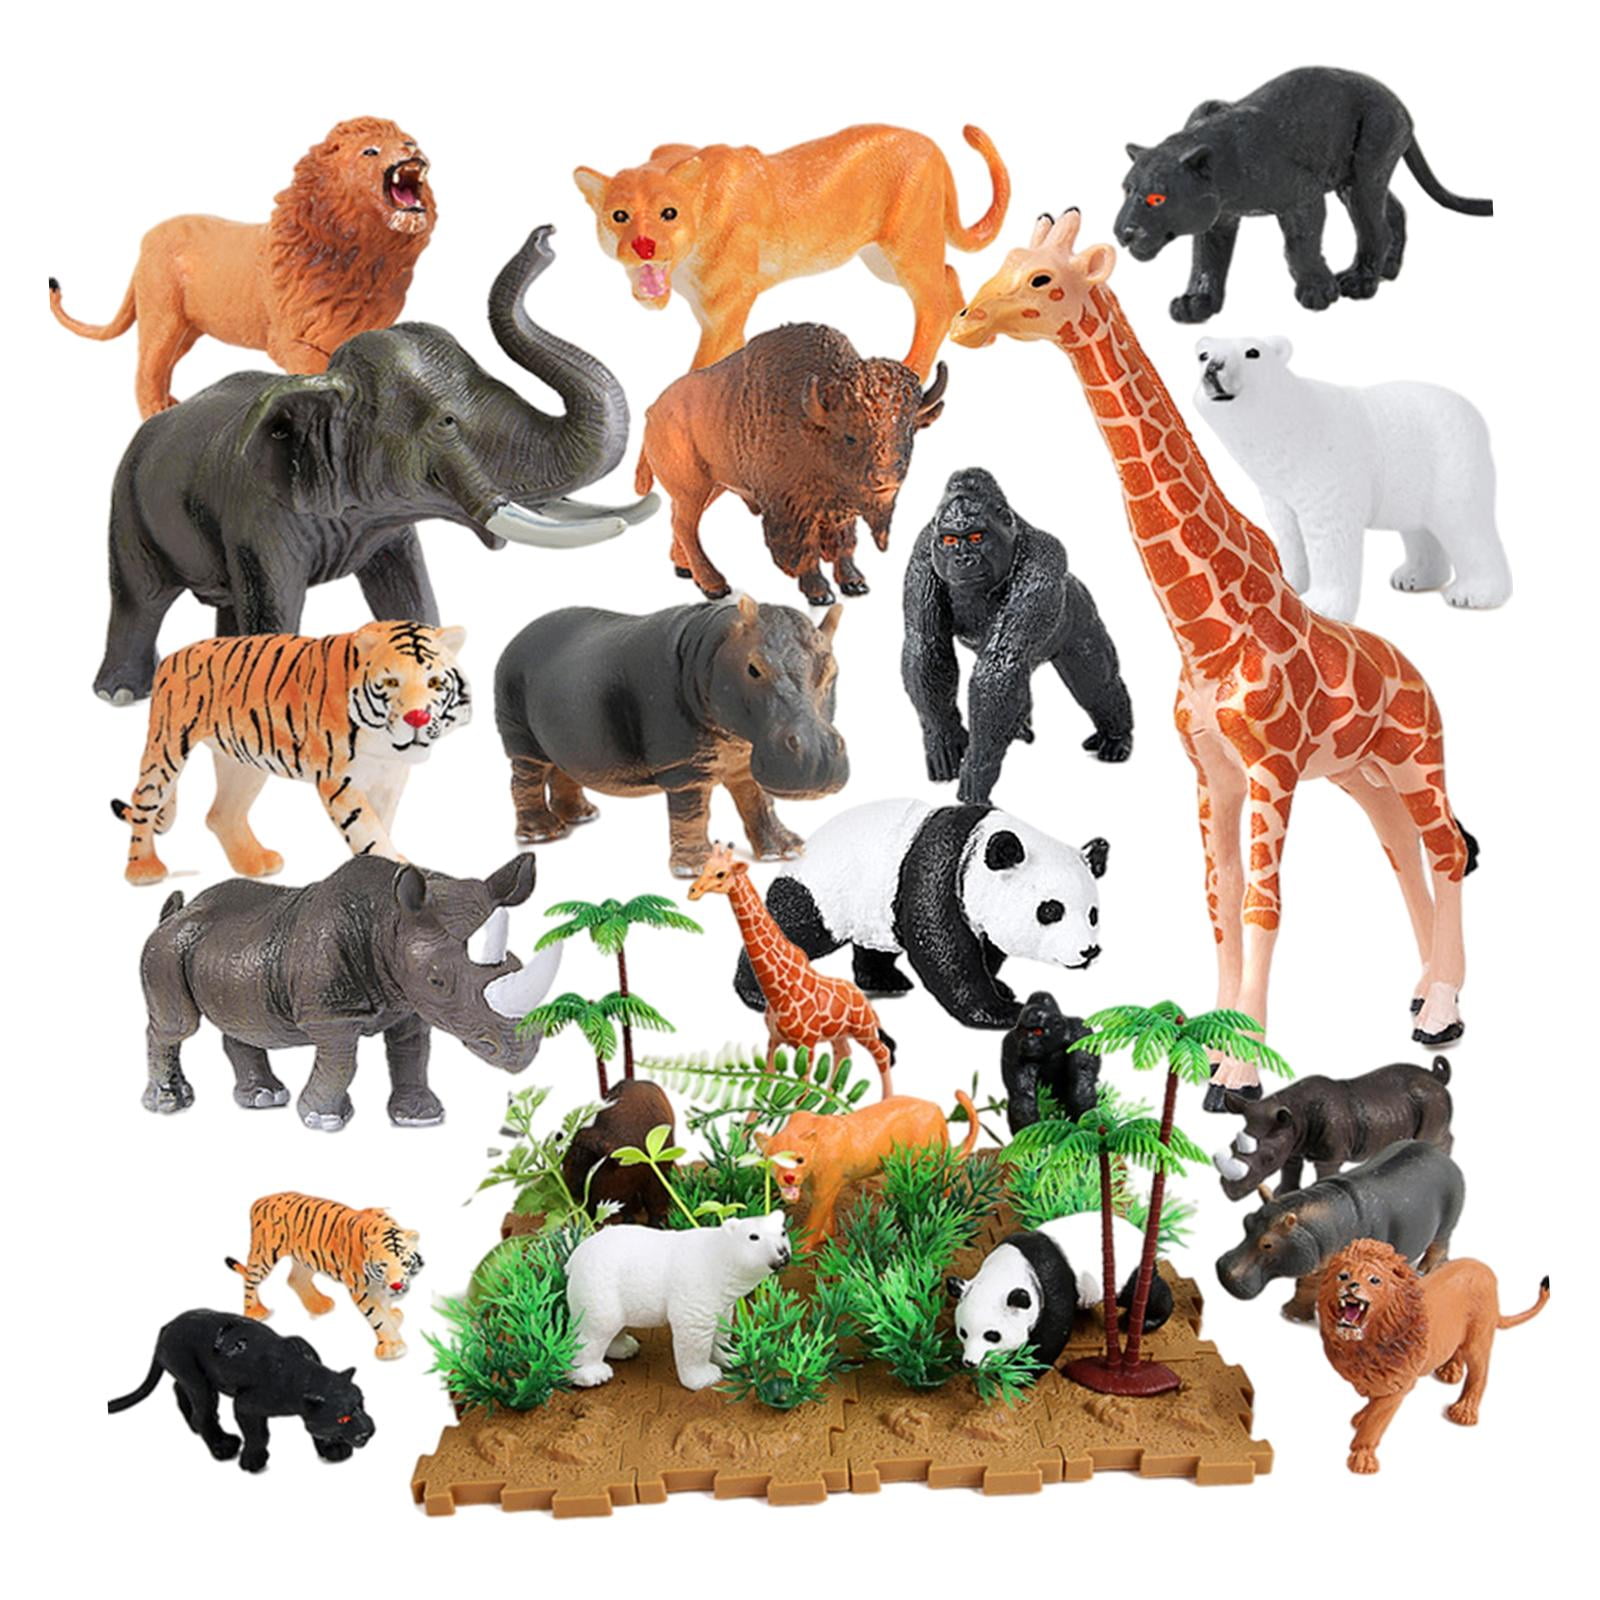 Safari Animals Figures Toys Realistic Wild Zoo Animals Figurines with 